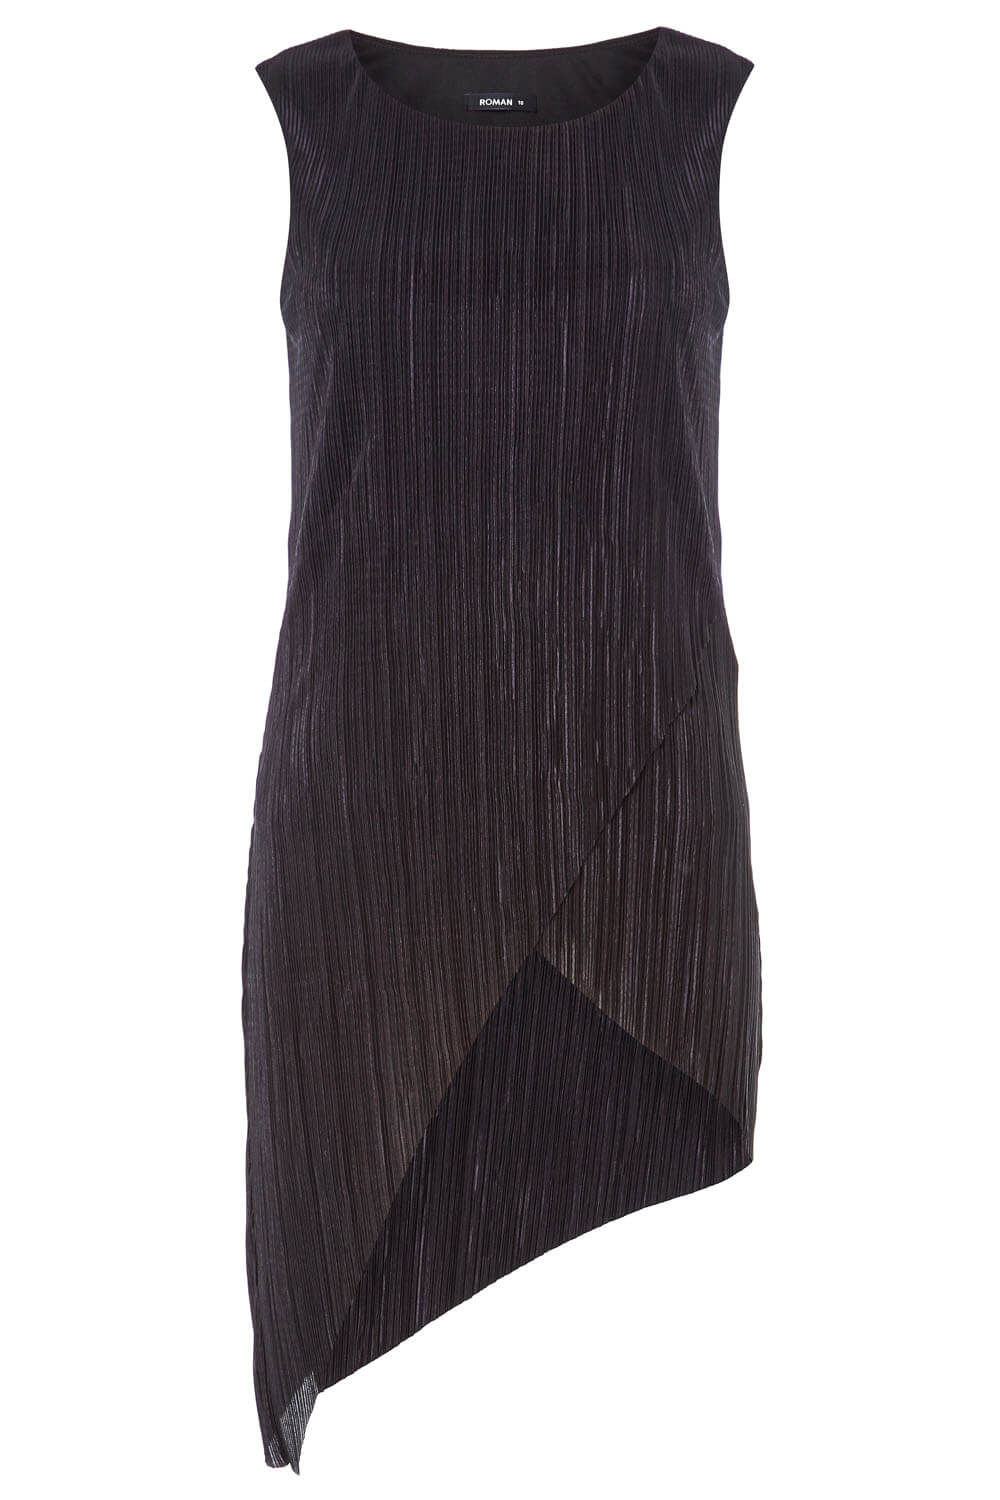 Black Plisse Sleeveless Asymmetric Tunic Top, Image 5 of 5